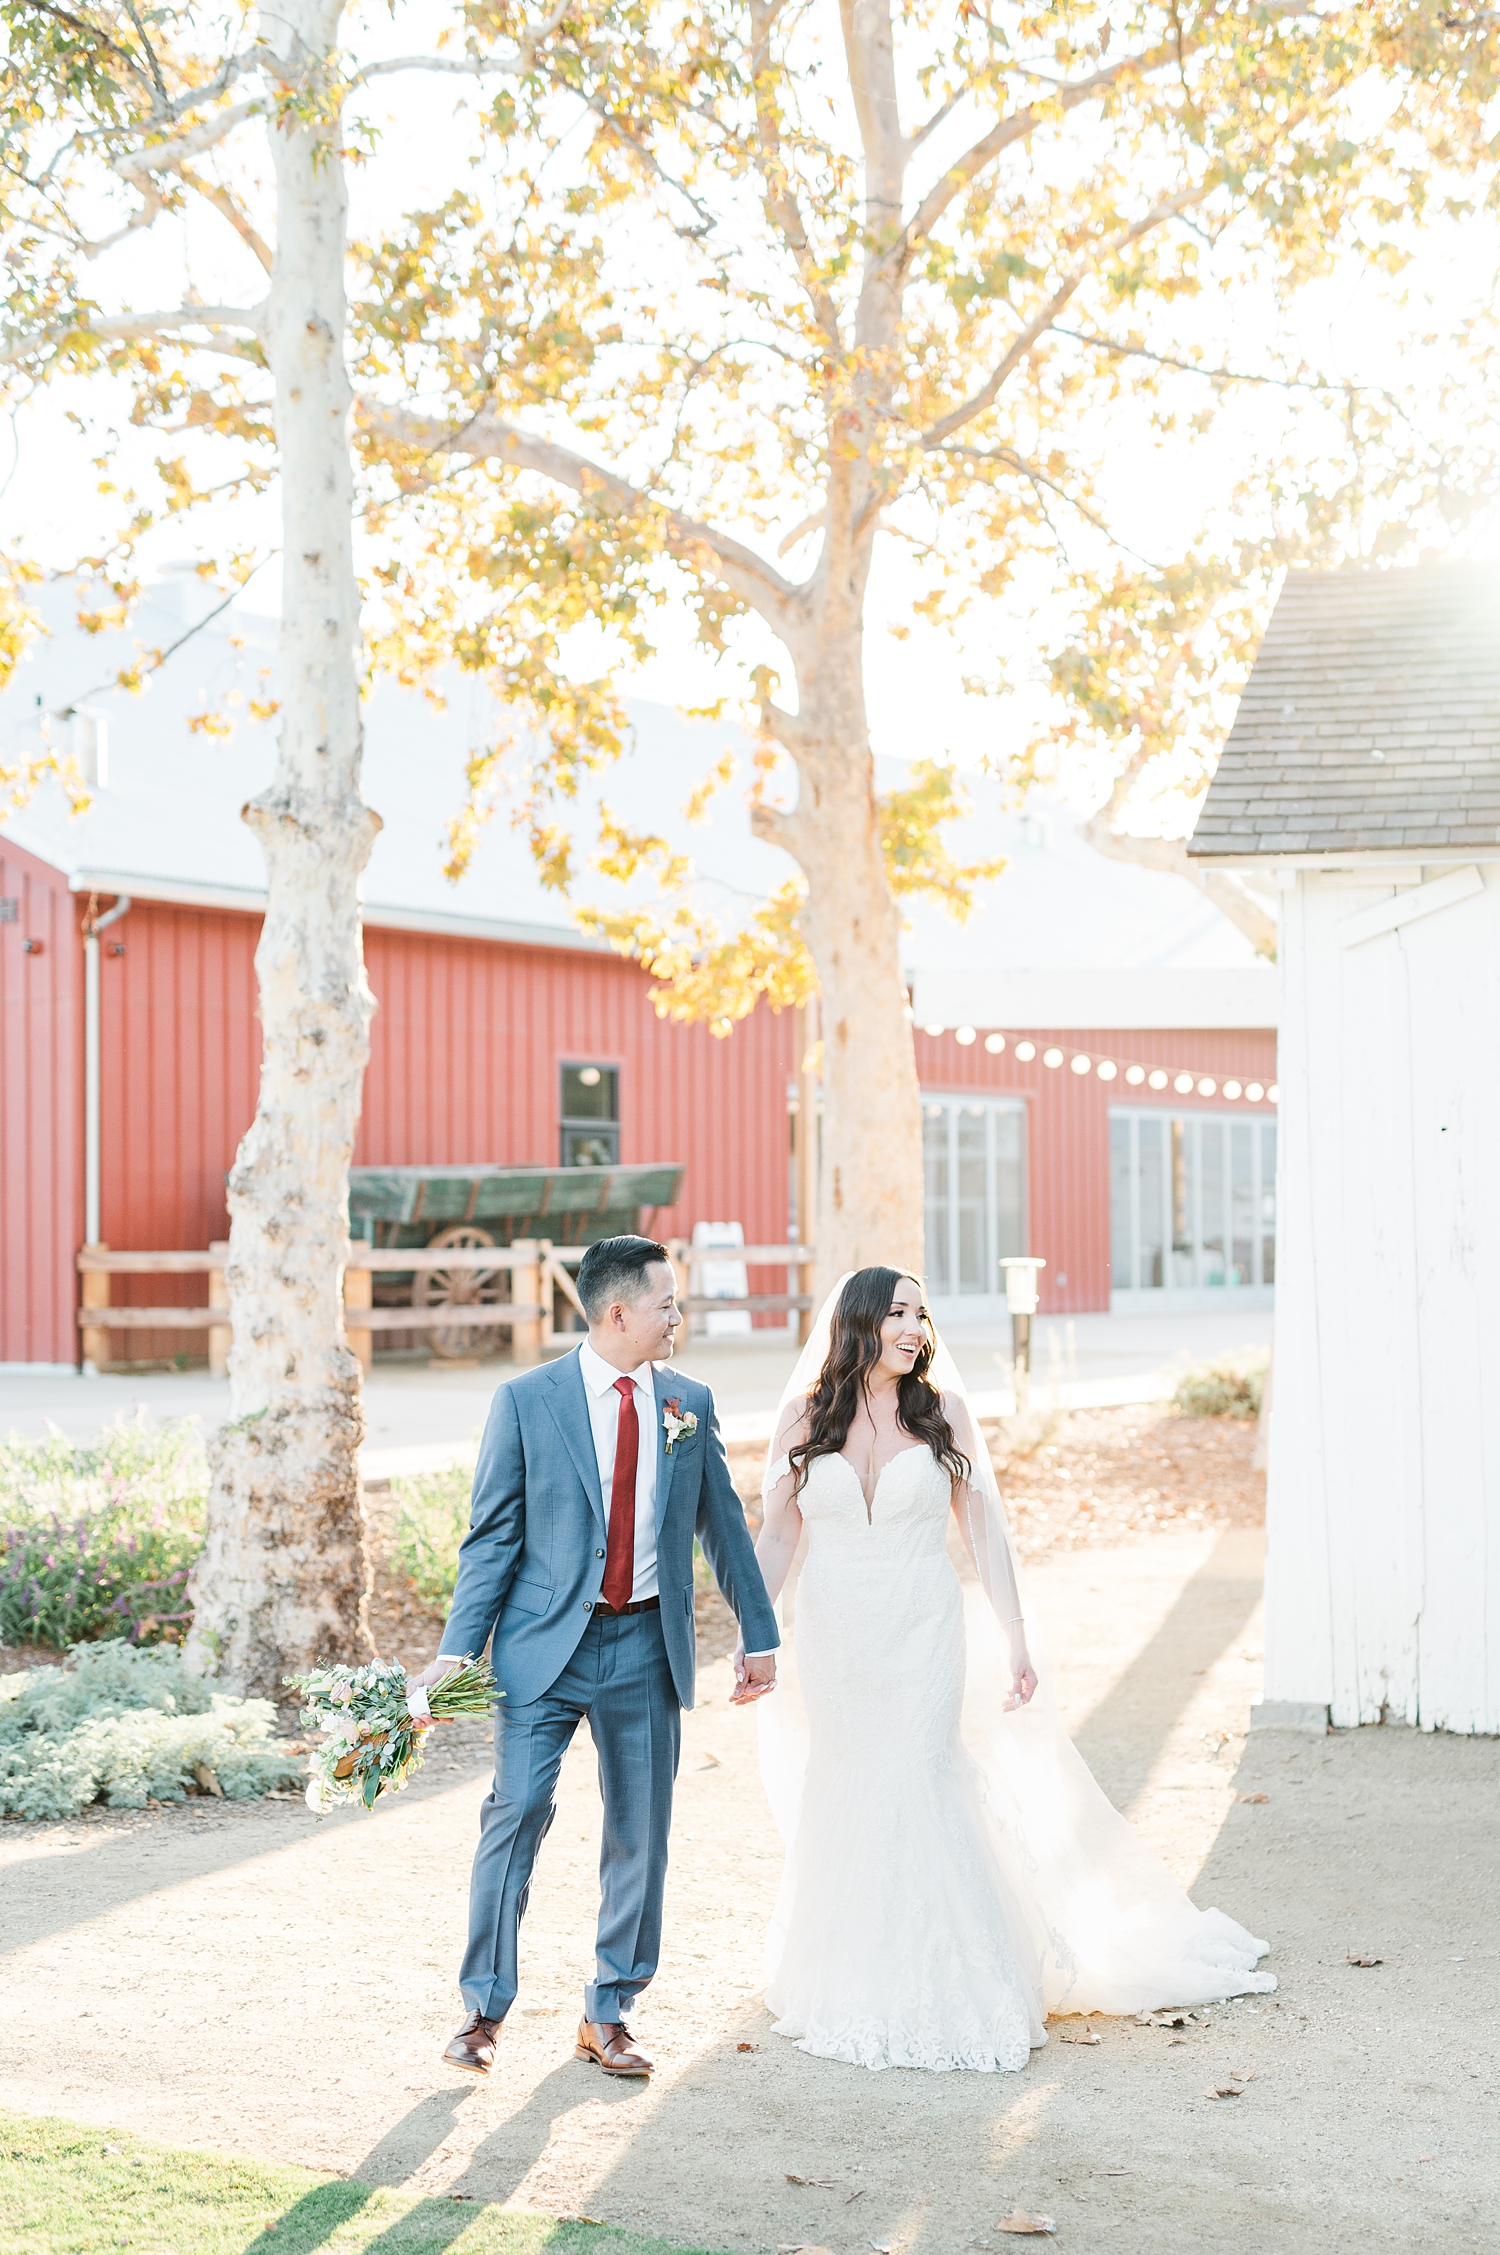 The Barn at Aliso Viejo Ranch | Orange County Wedding Photographer -95.jpg